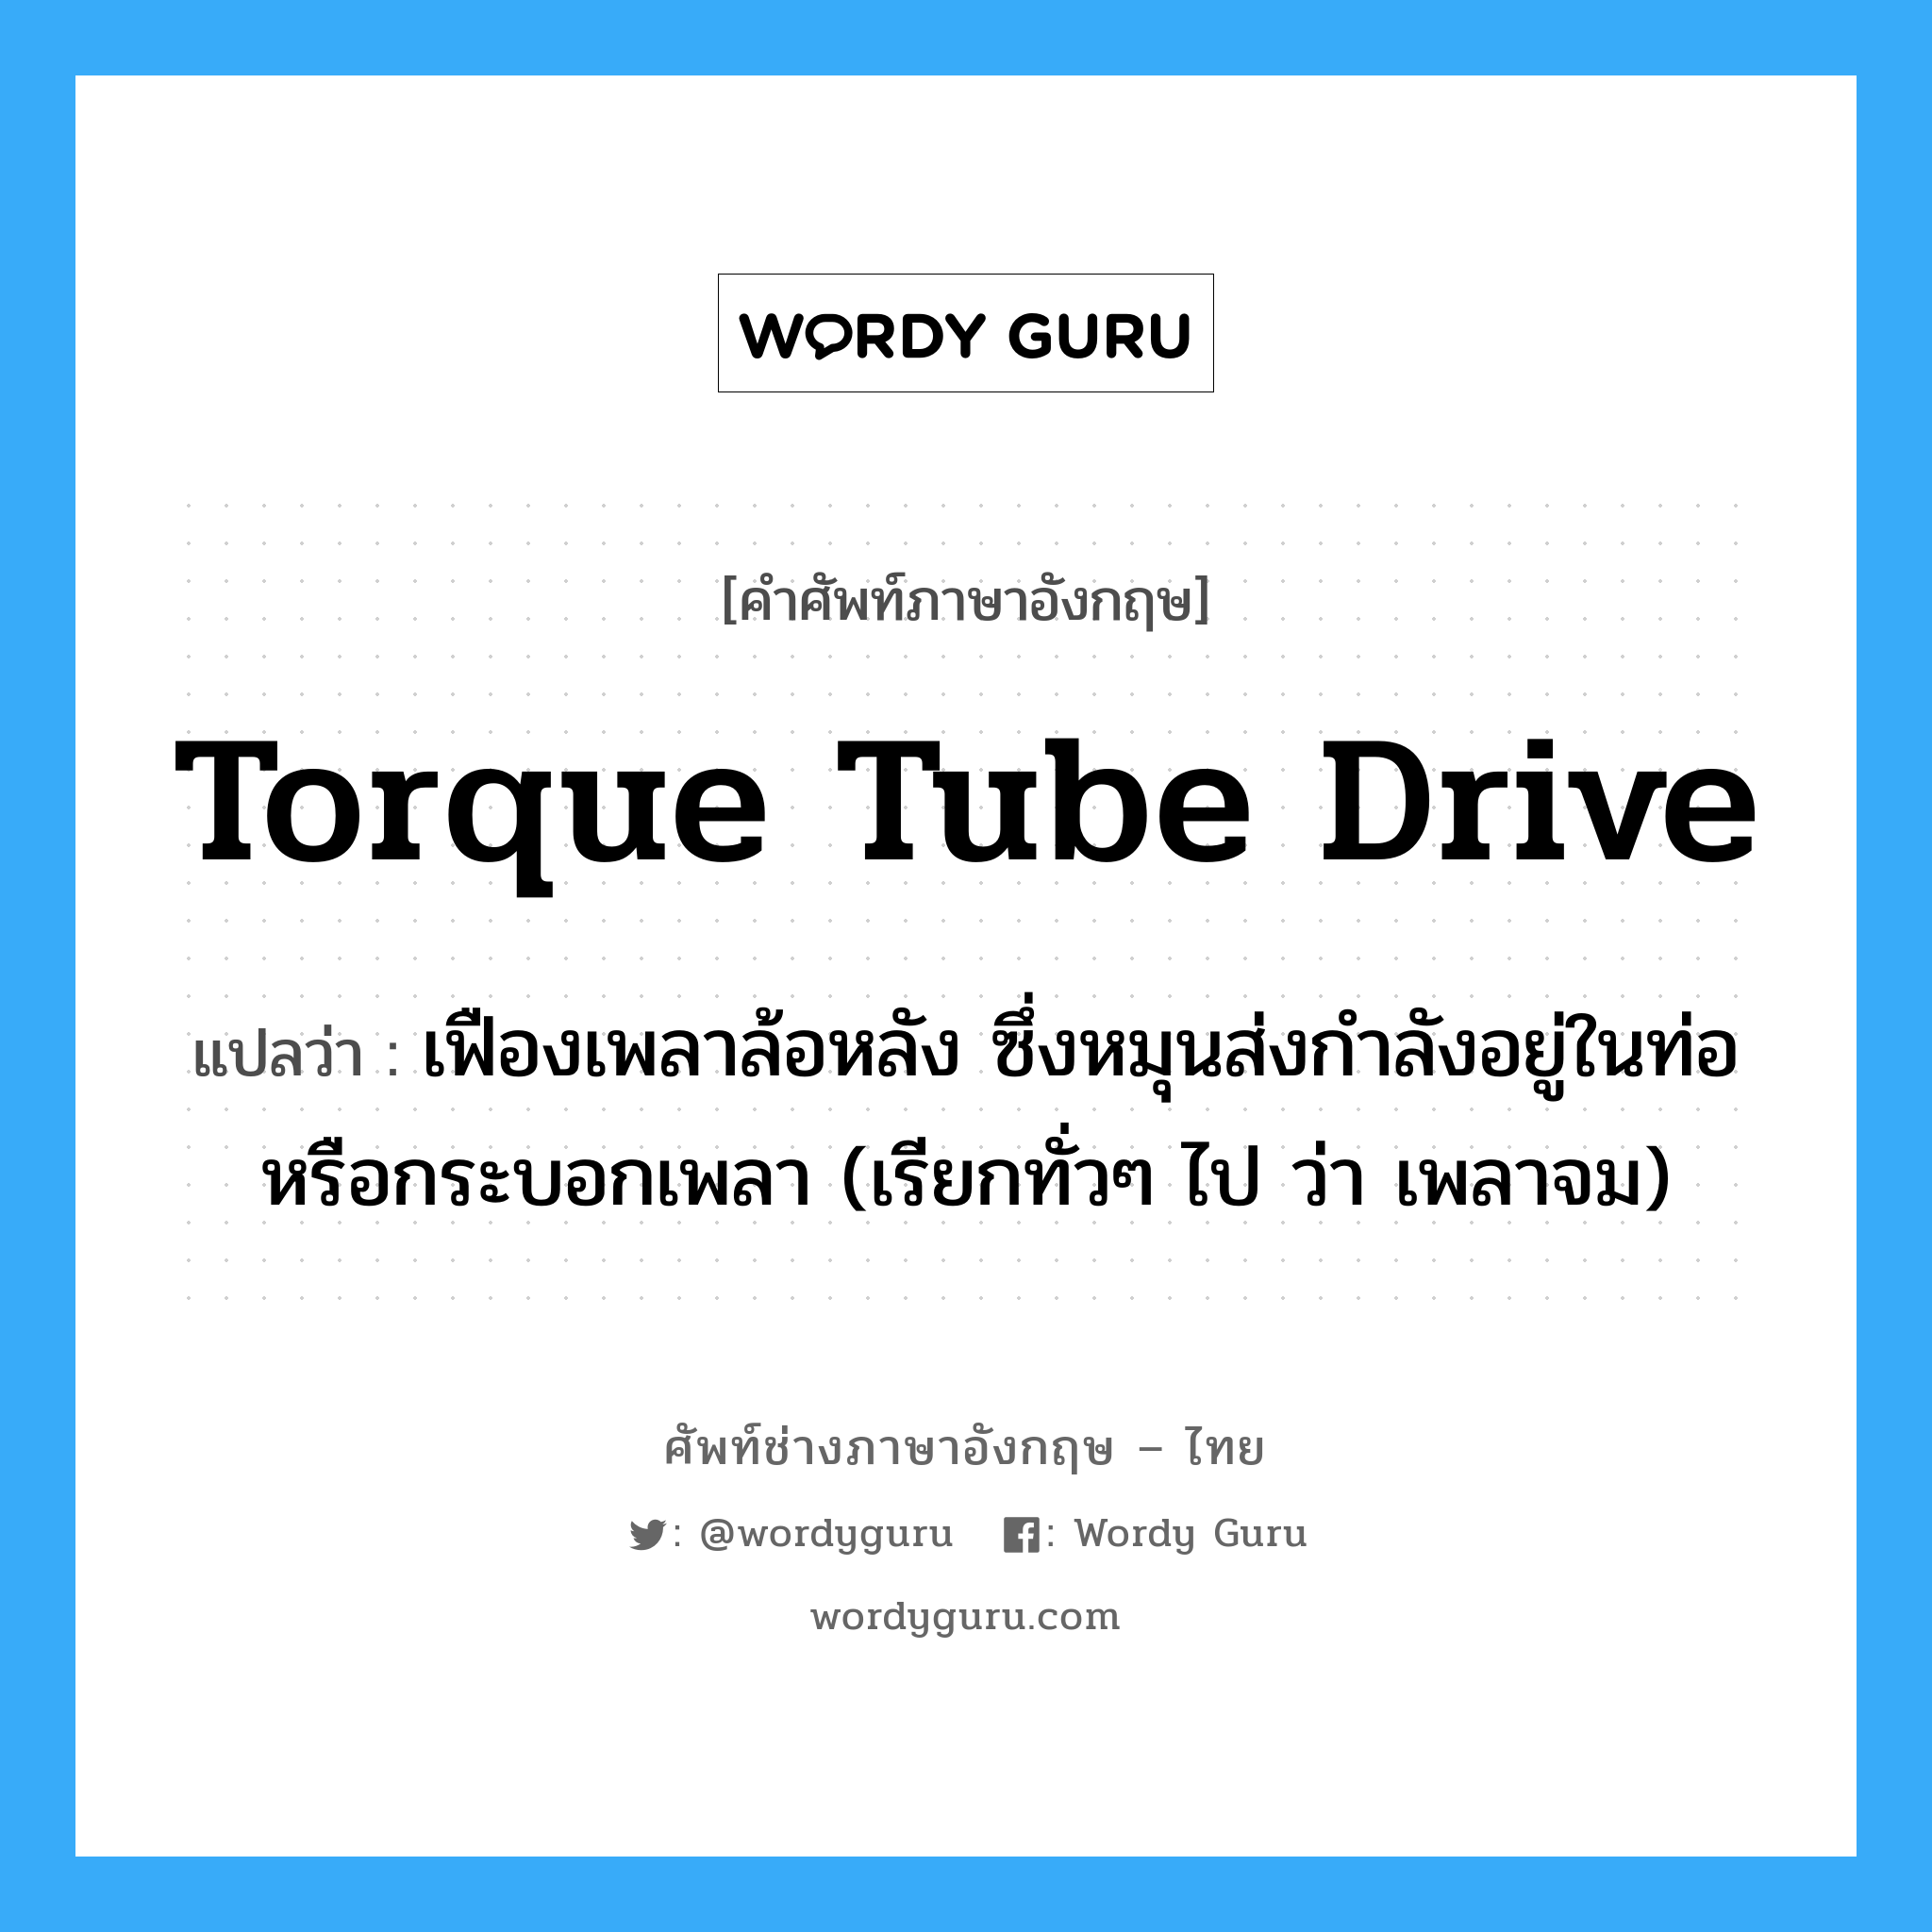 torque tube drive แปลว่า?, คำศัพท์ช่างภาษาอังกฤษ - ไทย torque tube drive คำศัพท์ภาษาอังกฤษ torque tube drive แปลว่า เฟืองเพลาล้อหลัง ซึ่งหมุนส่งกำลังอยู่ในท่อหรือกระบอกเพลา (เรียกทั่วๆ ไป ว่า เพลาจม)